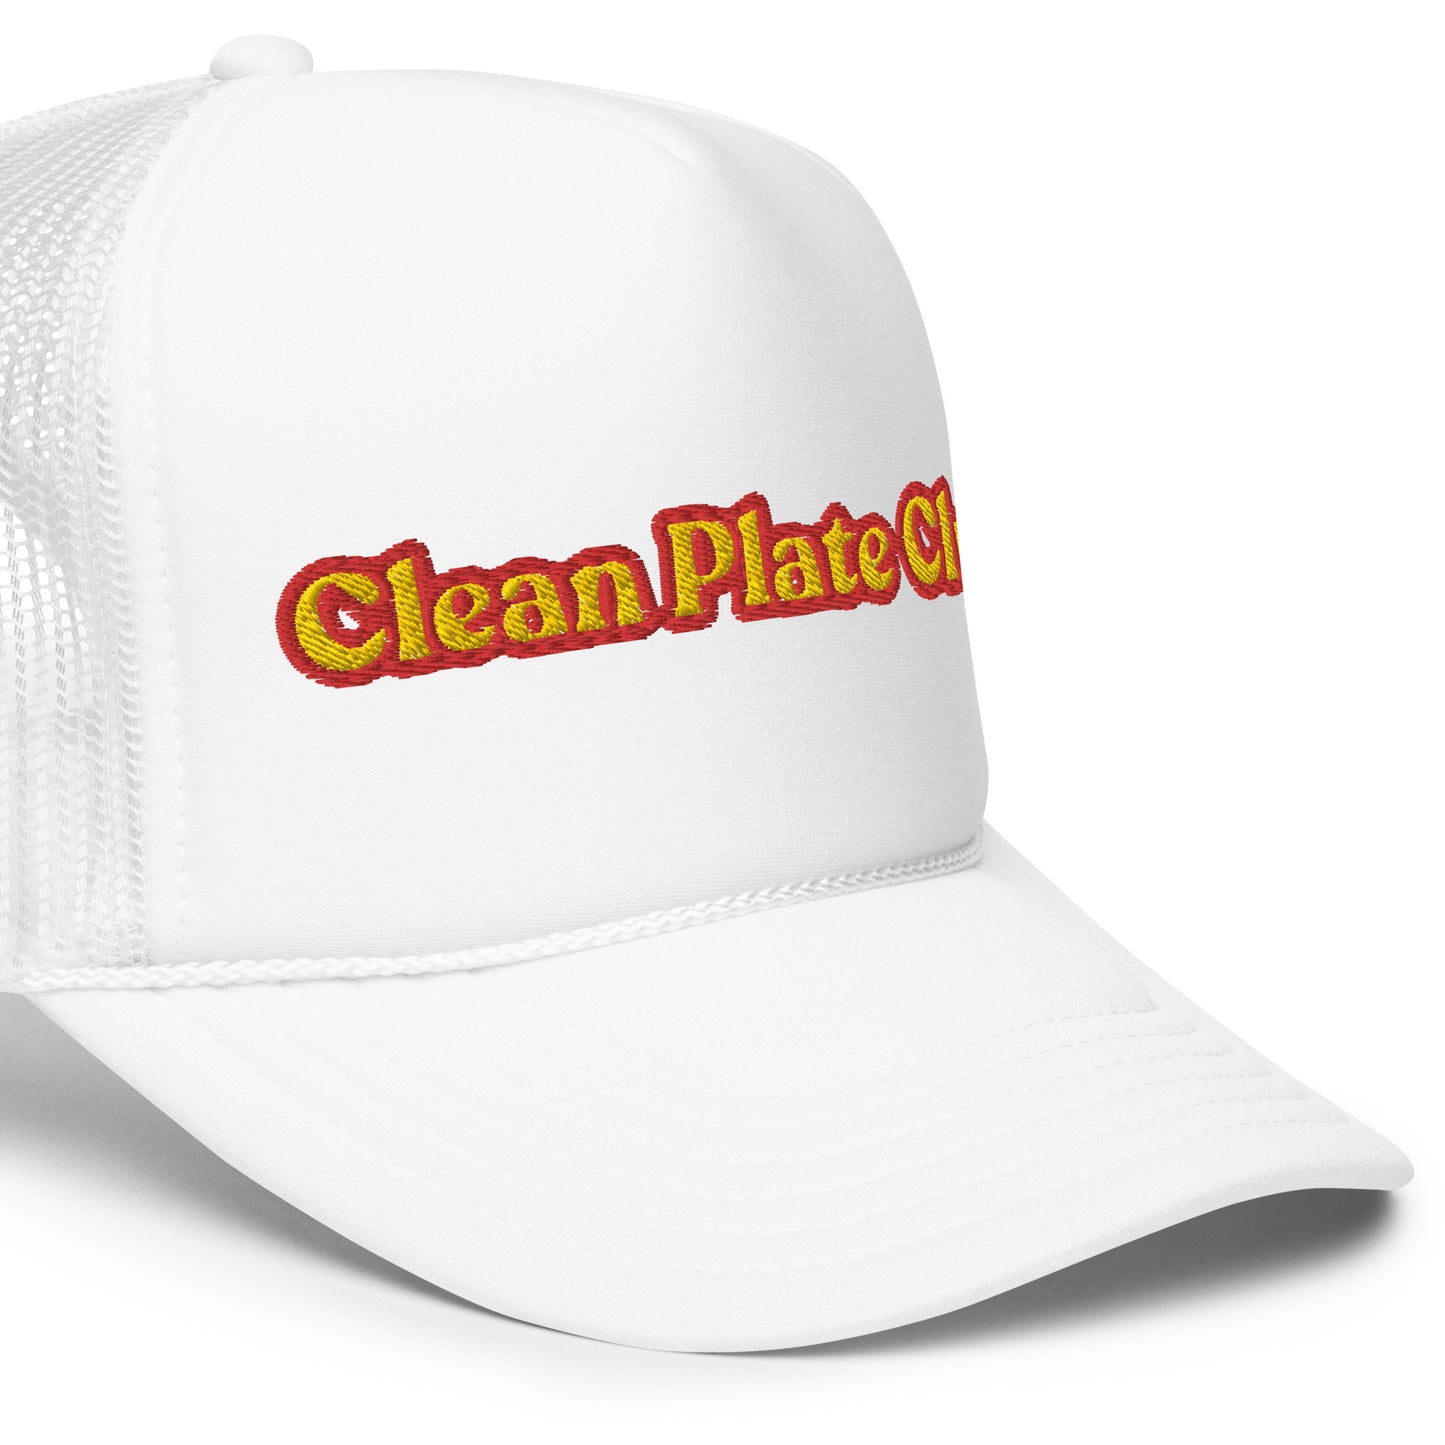 Clean Plate Club Trucker Hat